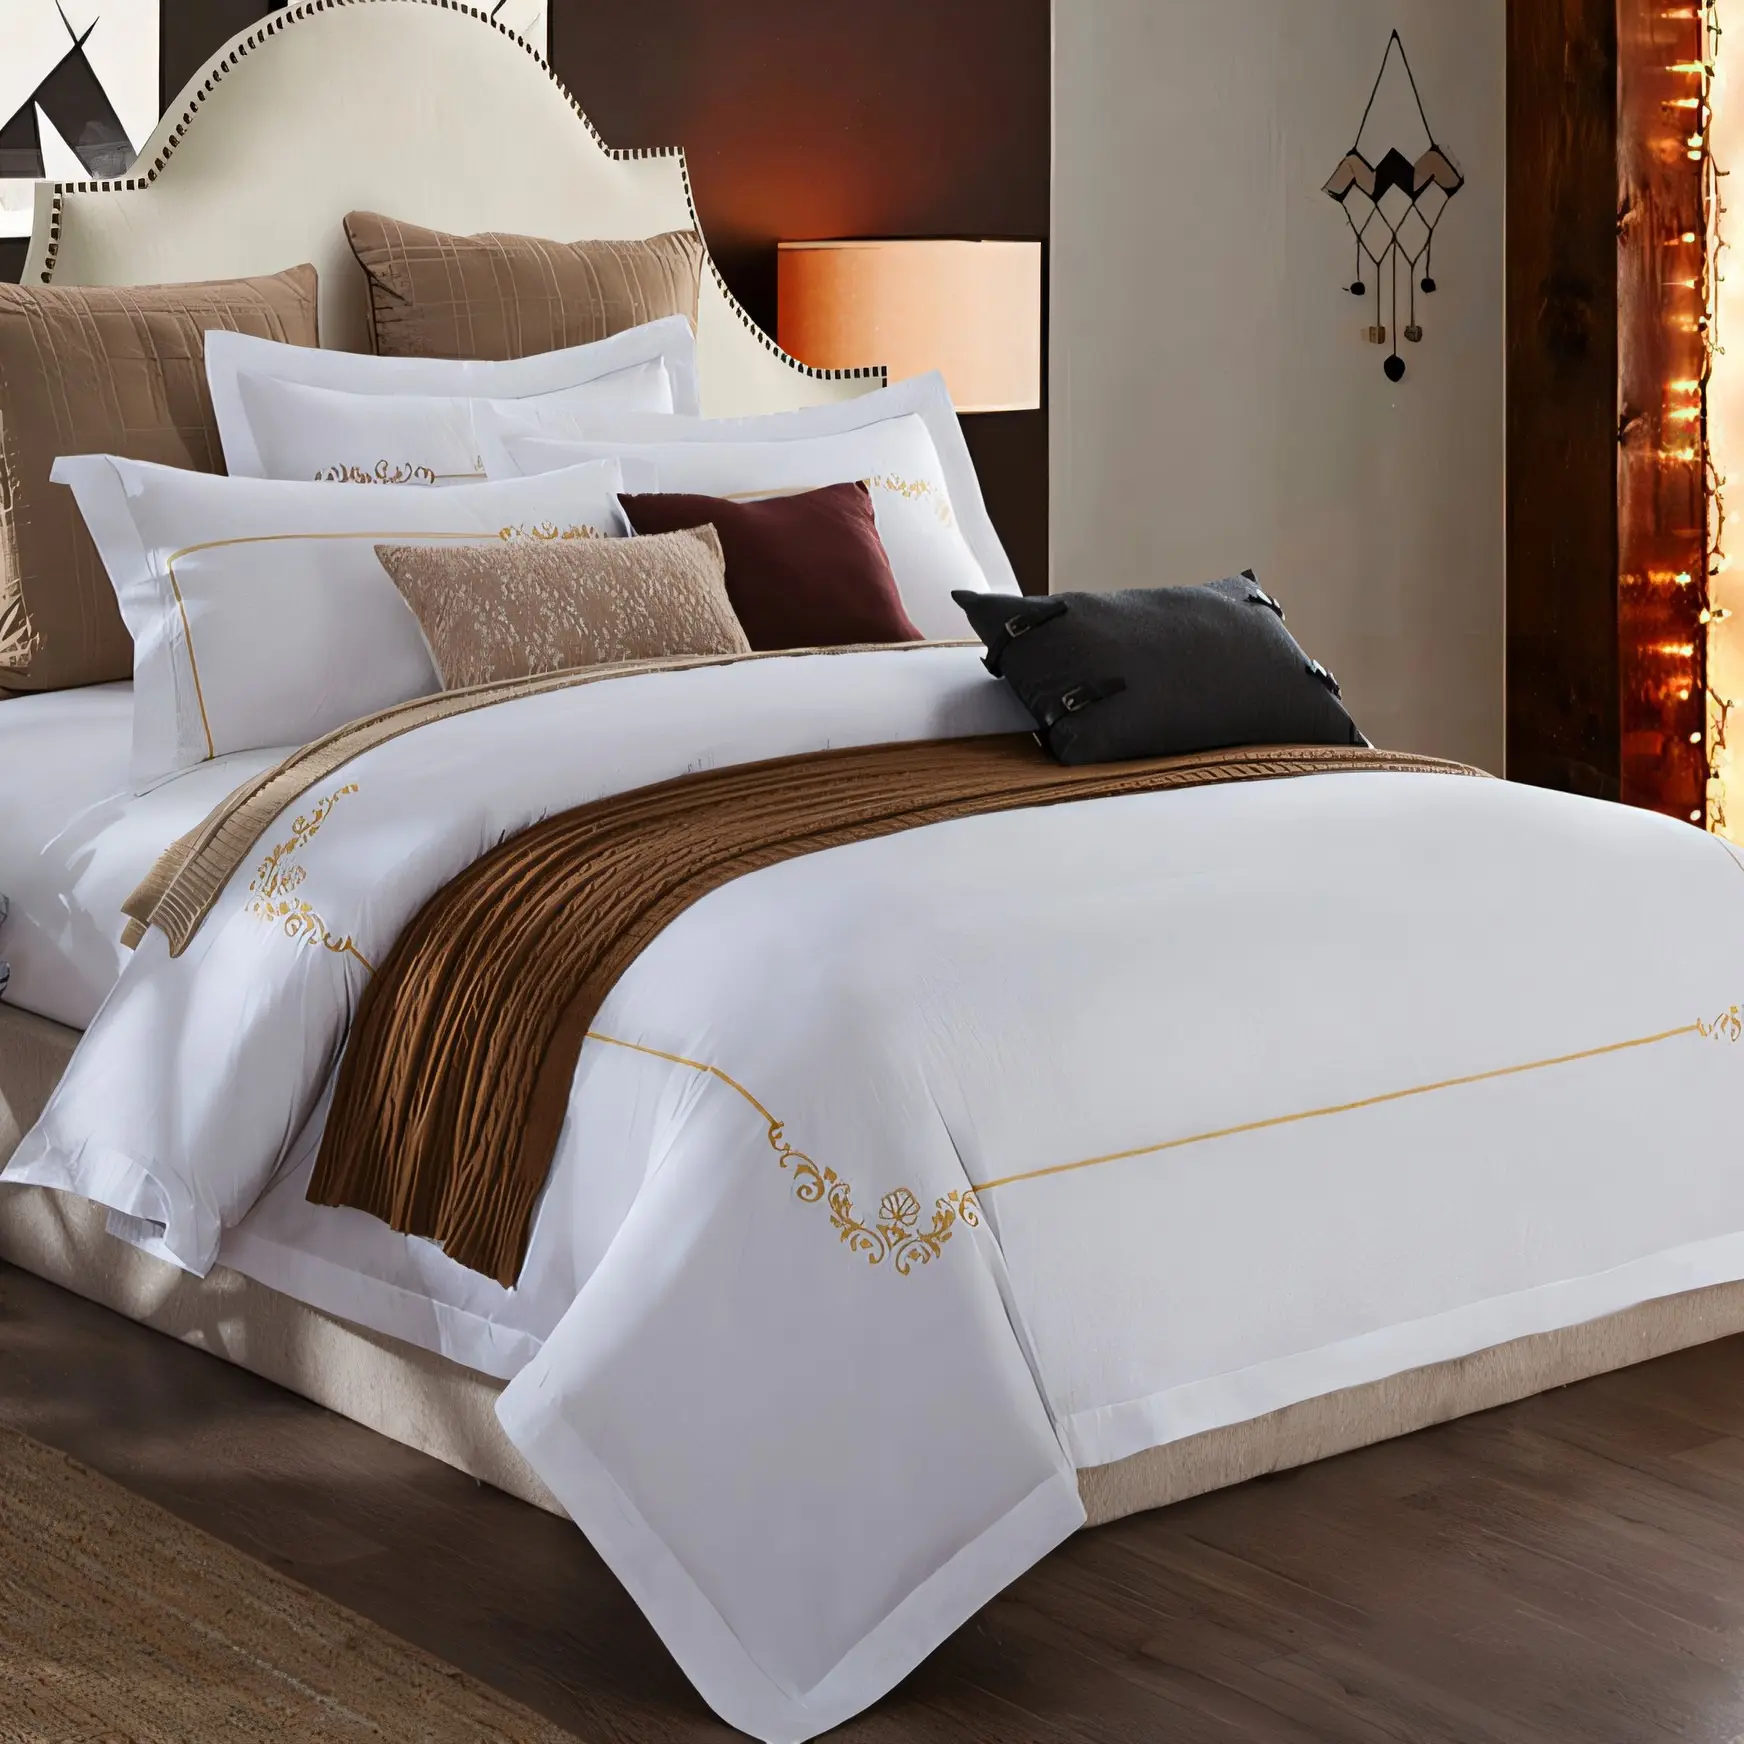 Percale ซูเปอร์คิงไซส์5ดาวโรงแรมใช้อียิปต์ผ้าฝ้ายชุดเครื่องนอนหรูสำหรับโรงแรม